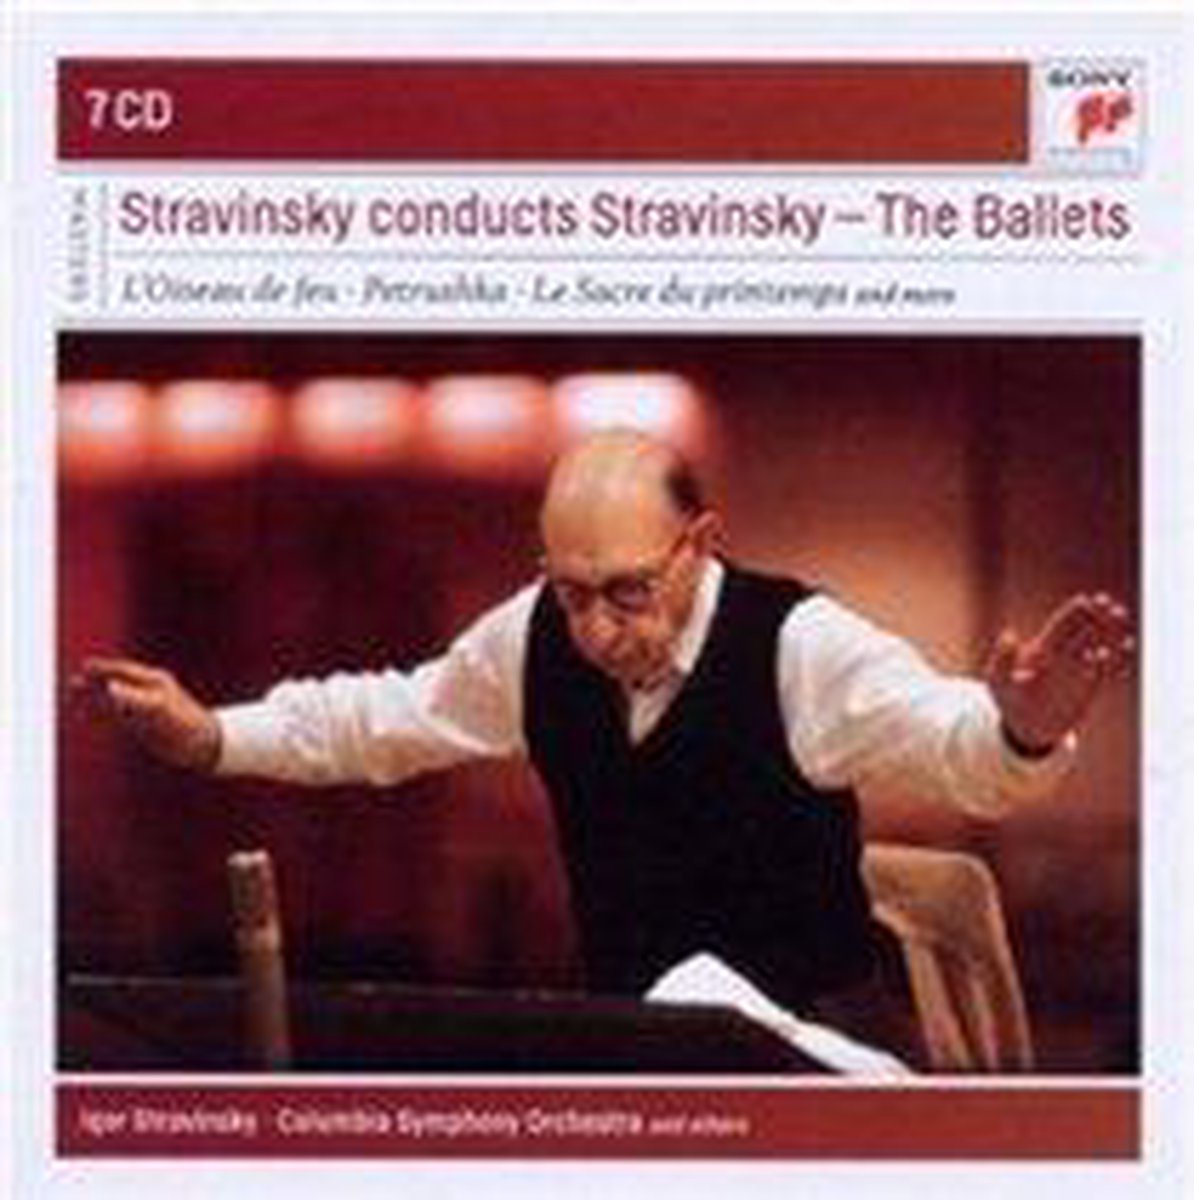 Stravinsky conducts Stravinsky - The Ballets Box Set | Igor Stravinsky